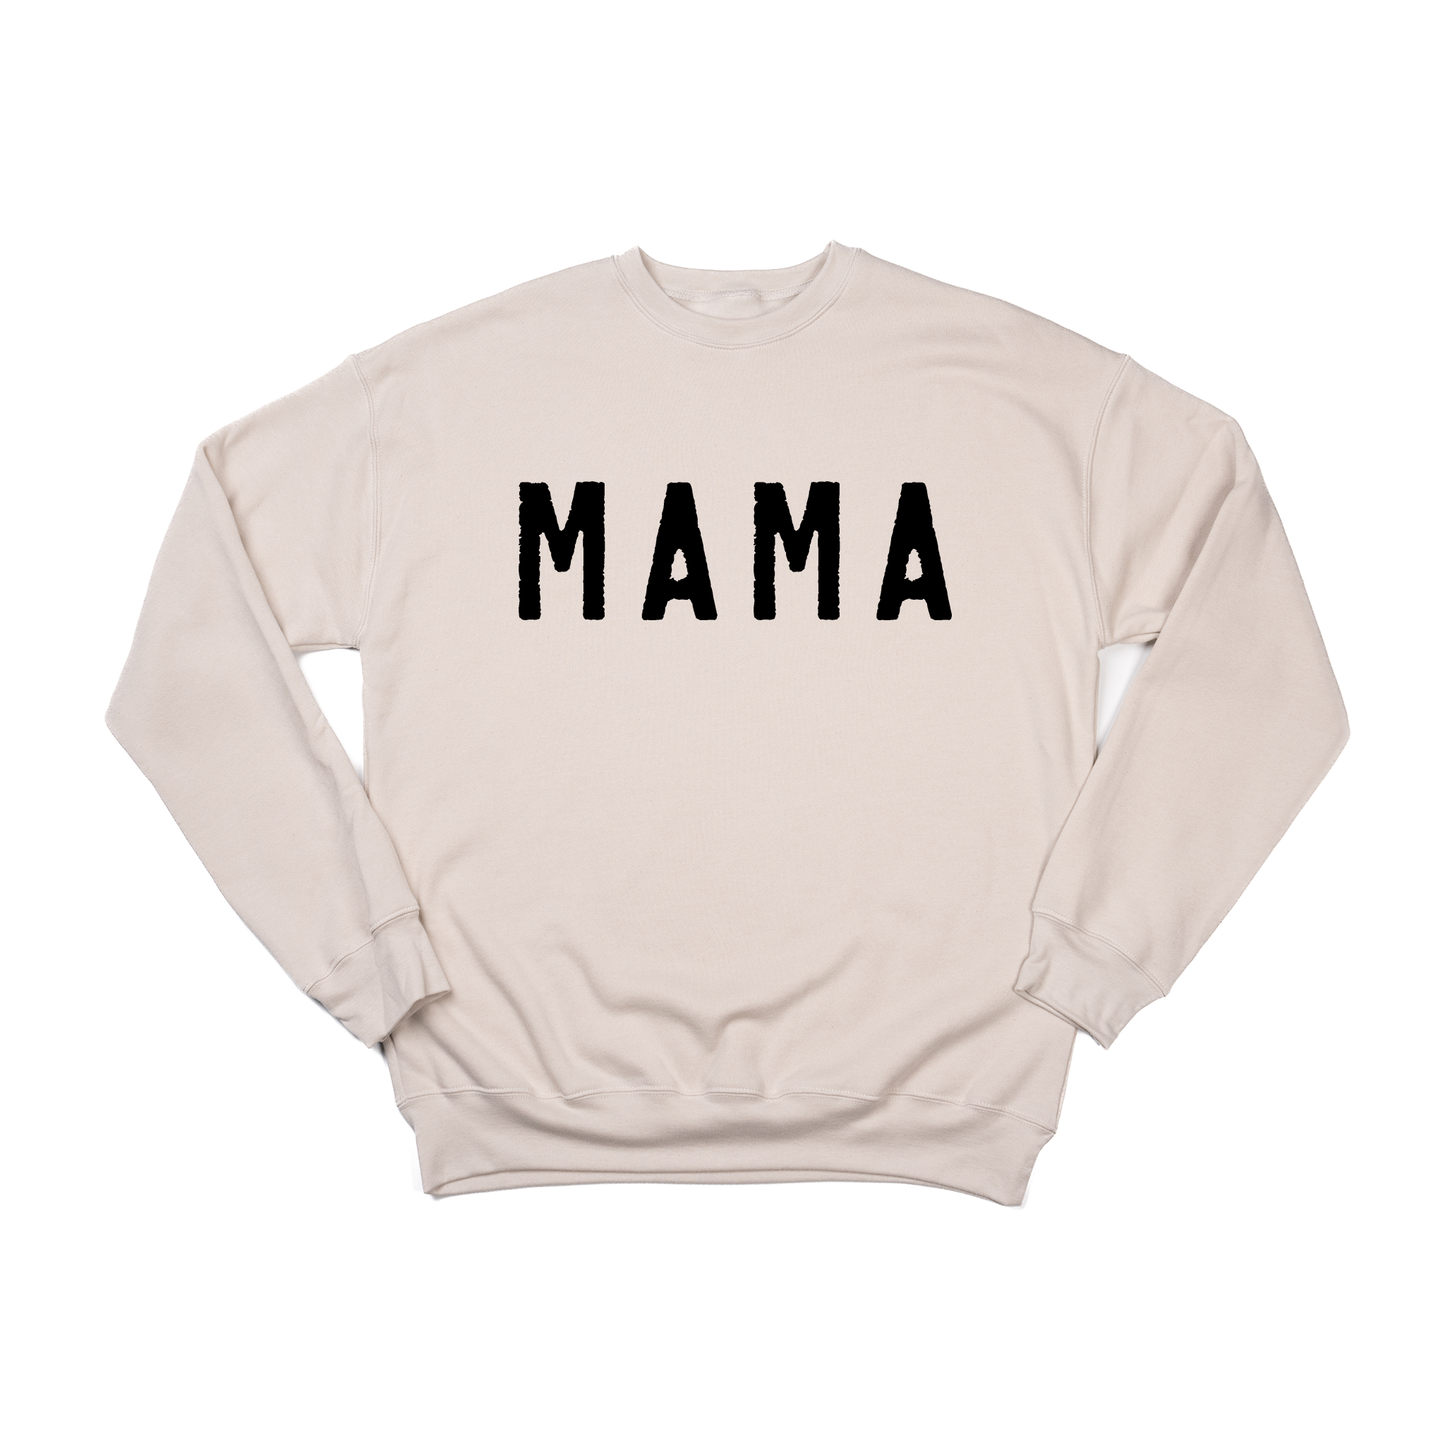 Mama (Rough, Black) - Sweatshirt (Stone)